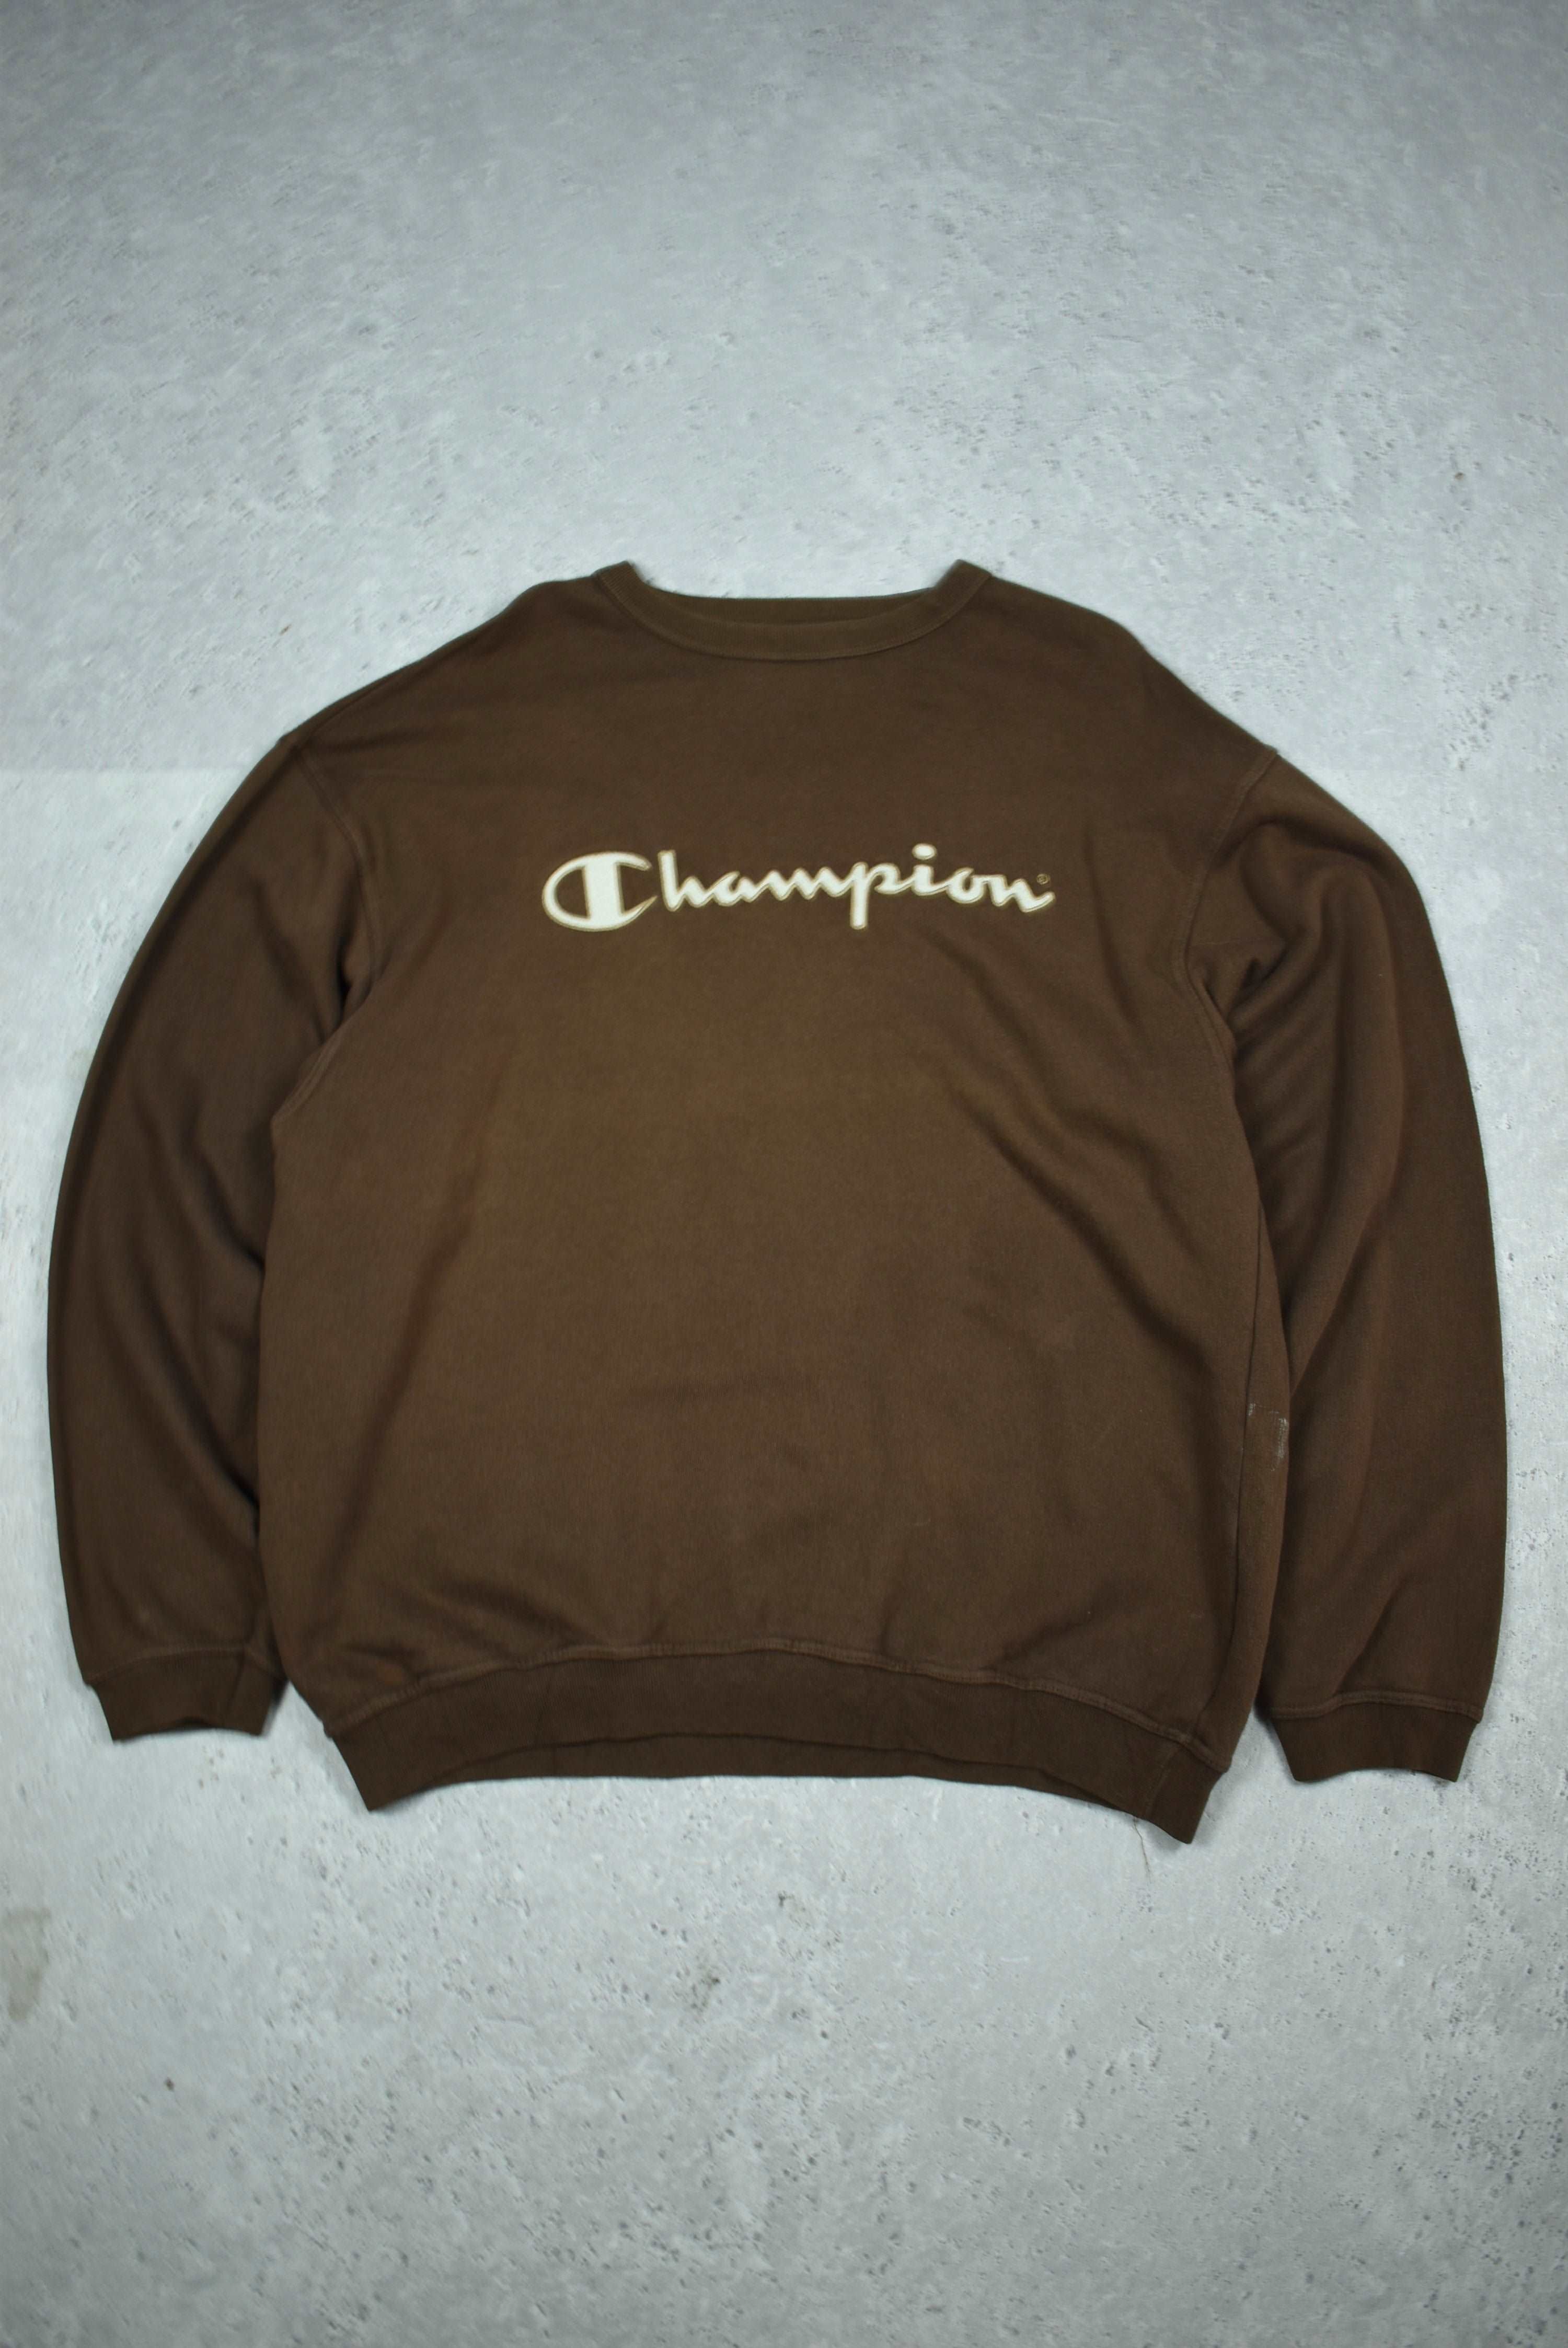 Vintage Champion Embroidered Logo Sweatshirt Large